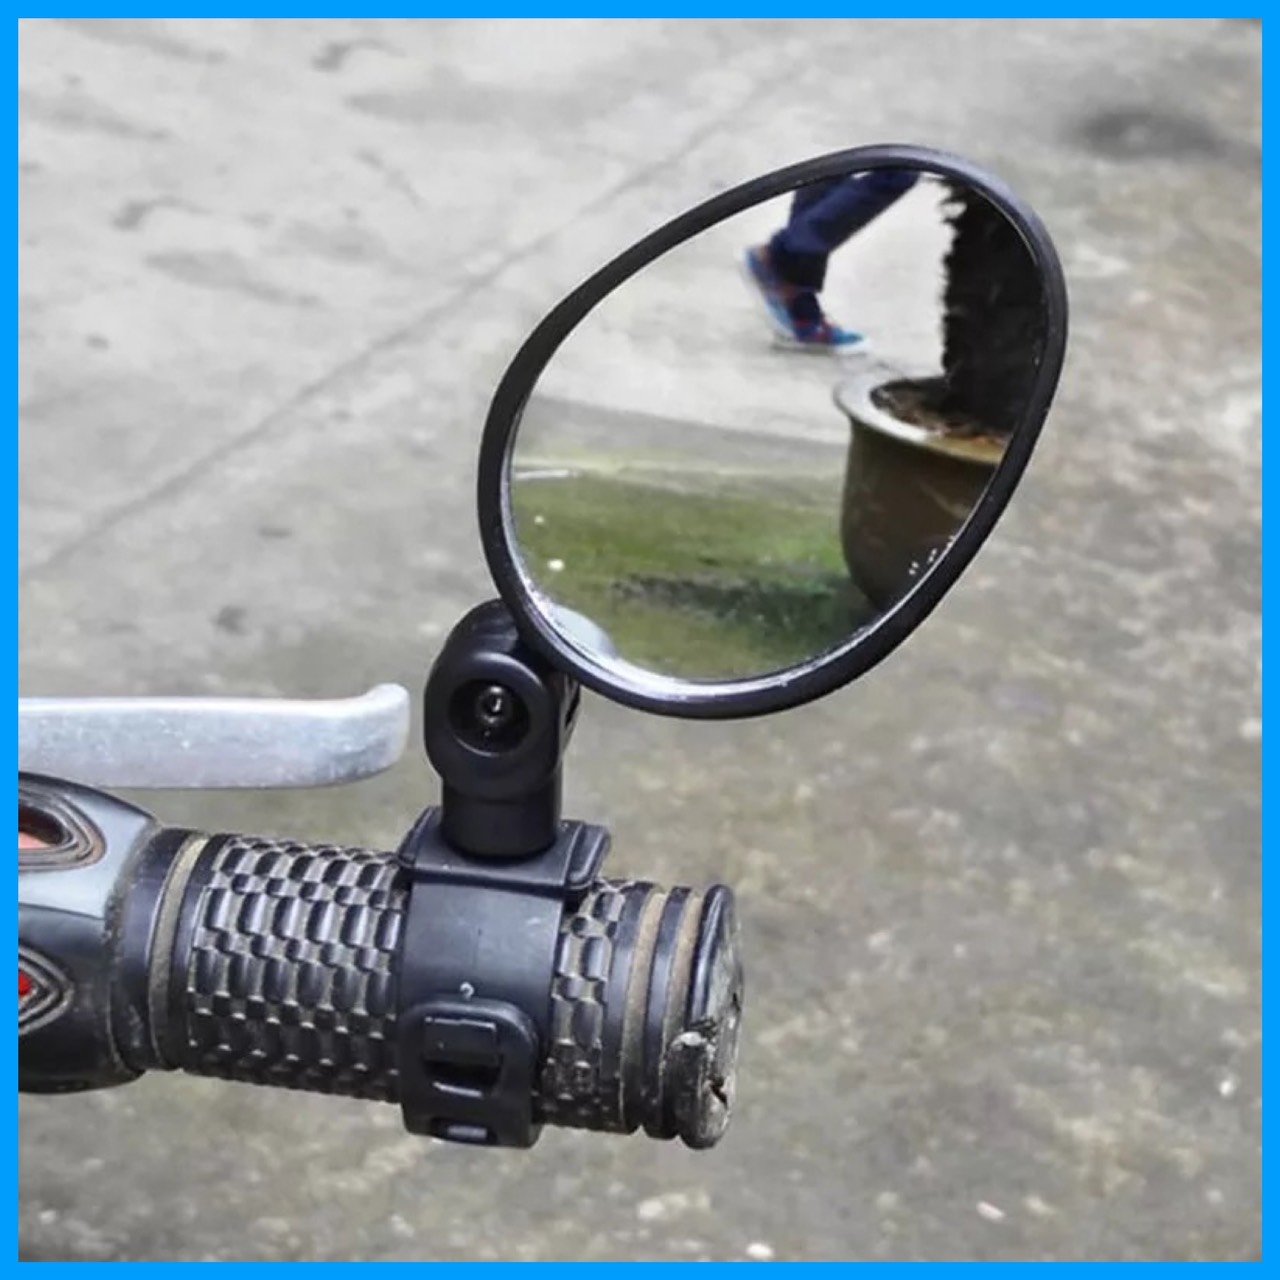 Soudelor กระจกมองข้างจักรยาน ราคาถูก ใช้ดี Bicycle mirror กระจกติดเสริมจักรยาน ไว้มองหลัง เพื่อความปลอดภัย ติดง่าย ทรงรีแบบสายรัด ขนาด7Cm (2ชิ้น)